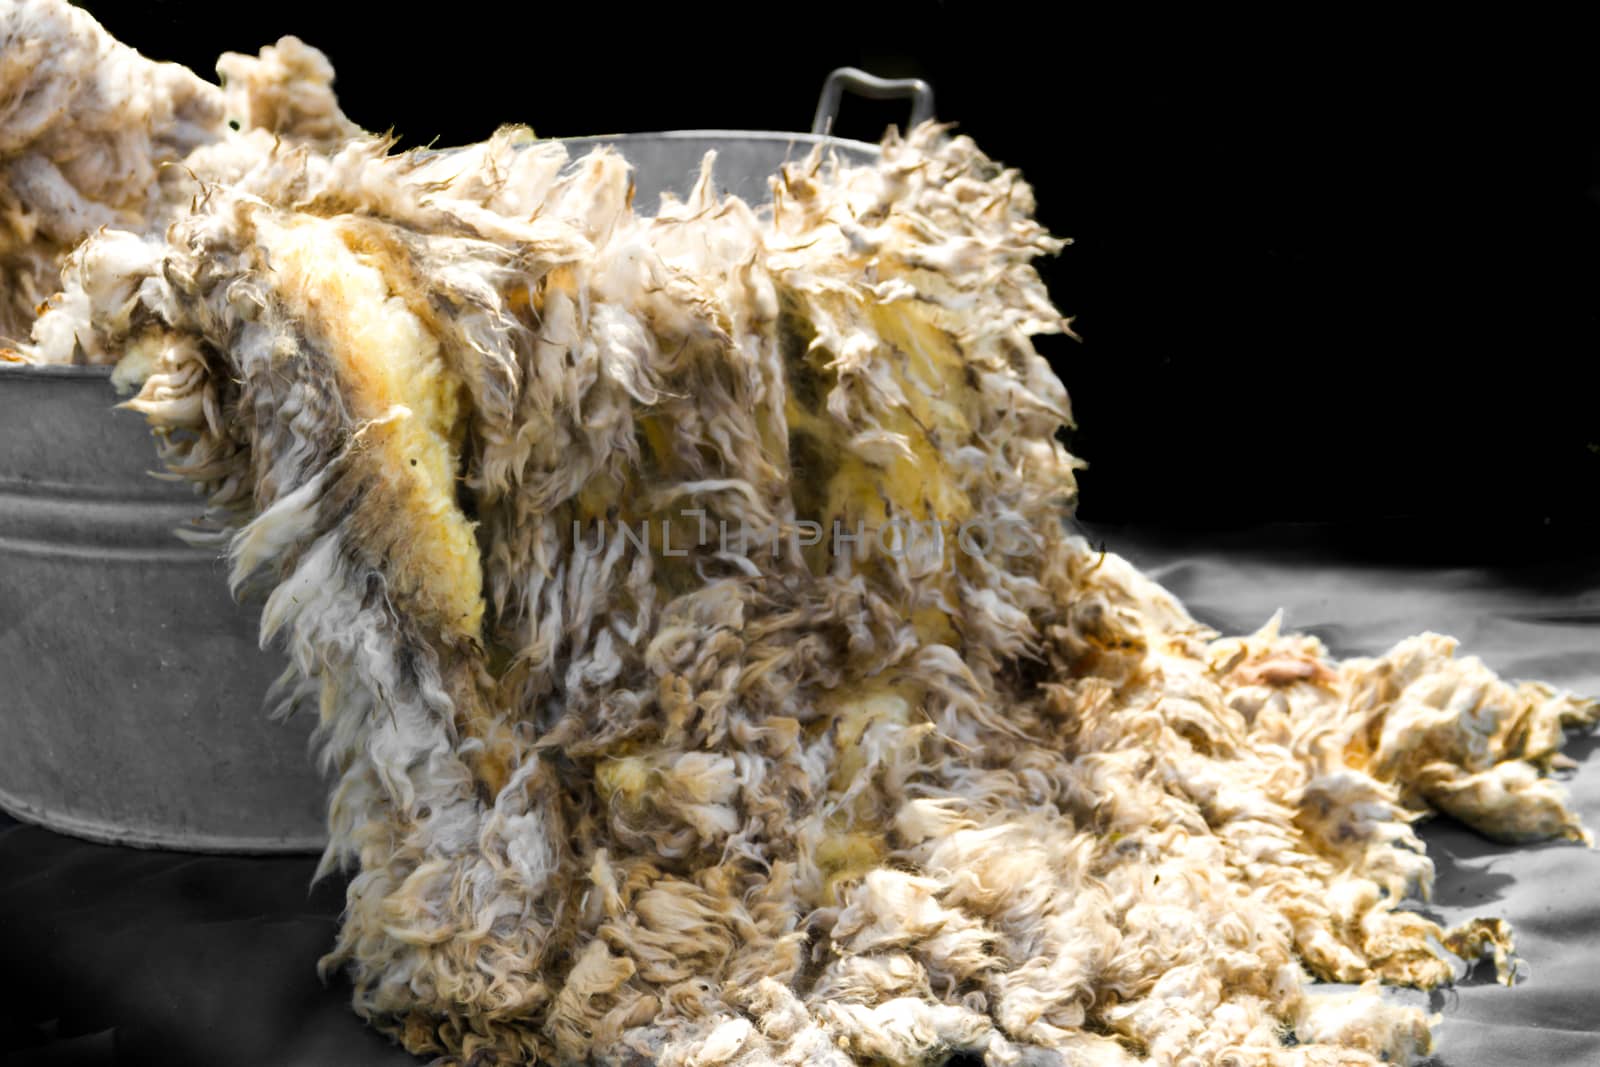 raw wool fleece just sheared before being spun by GabrielaBertolini